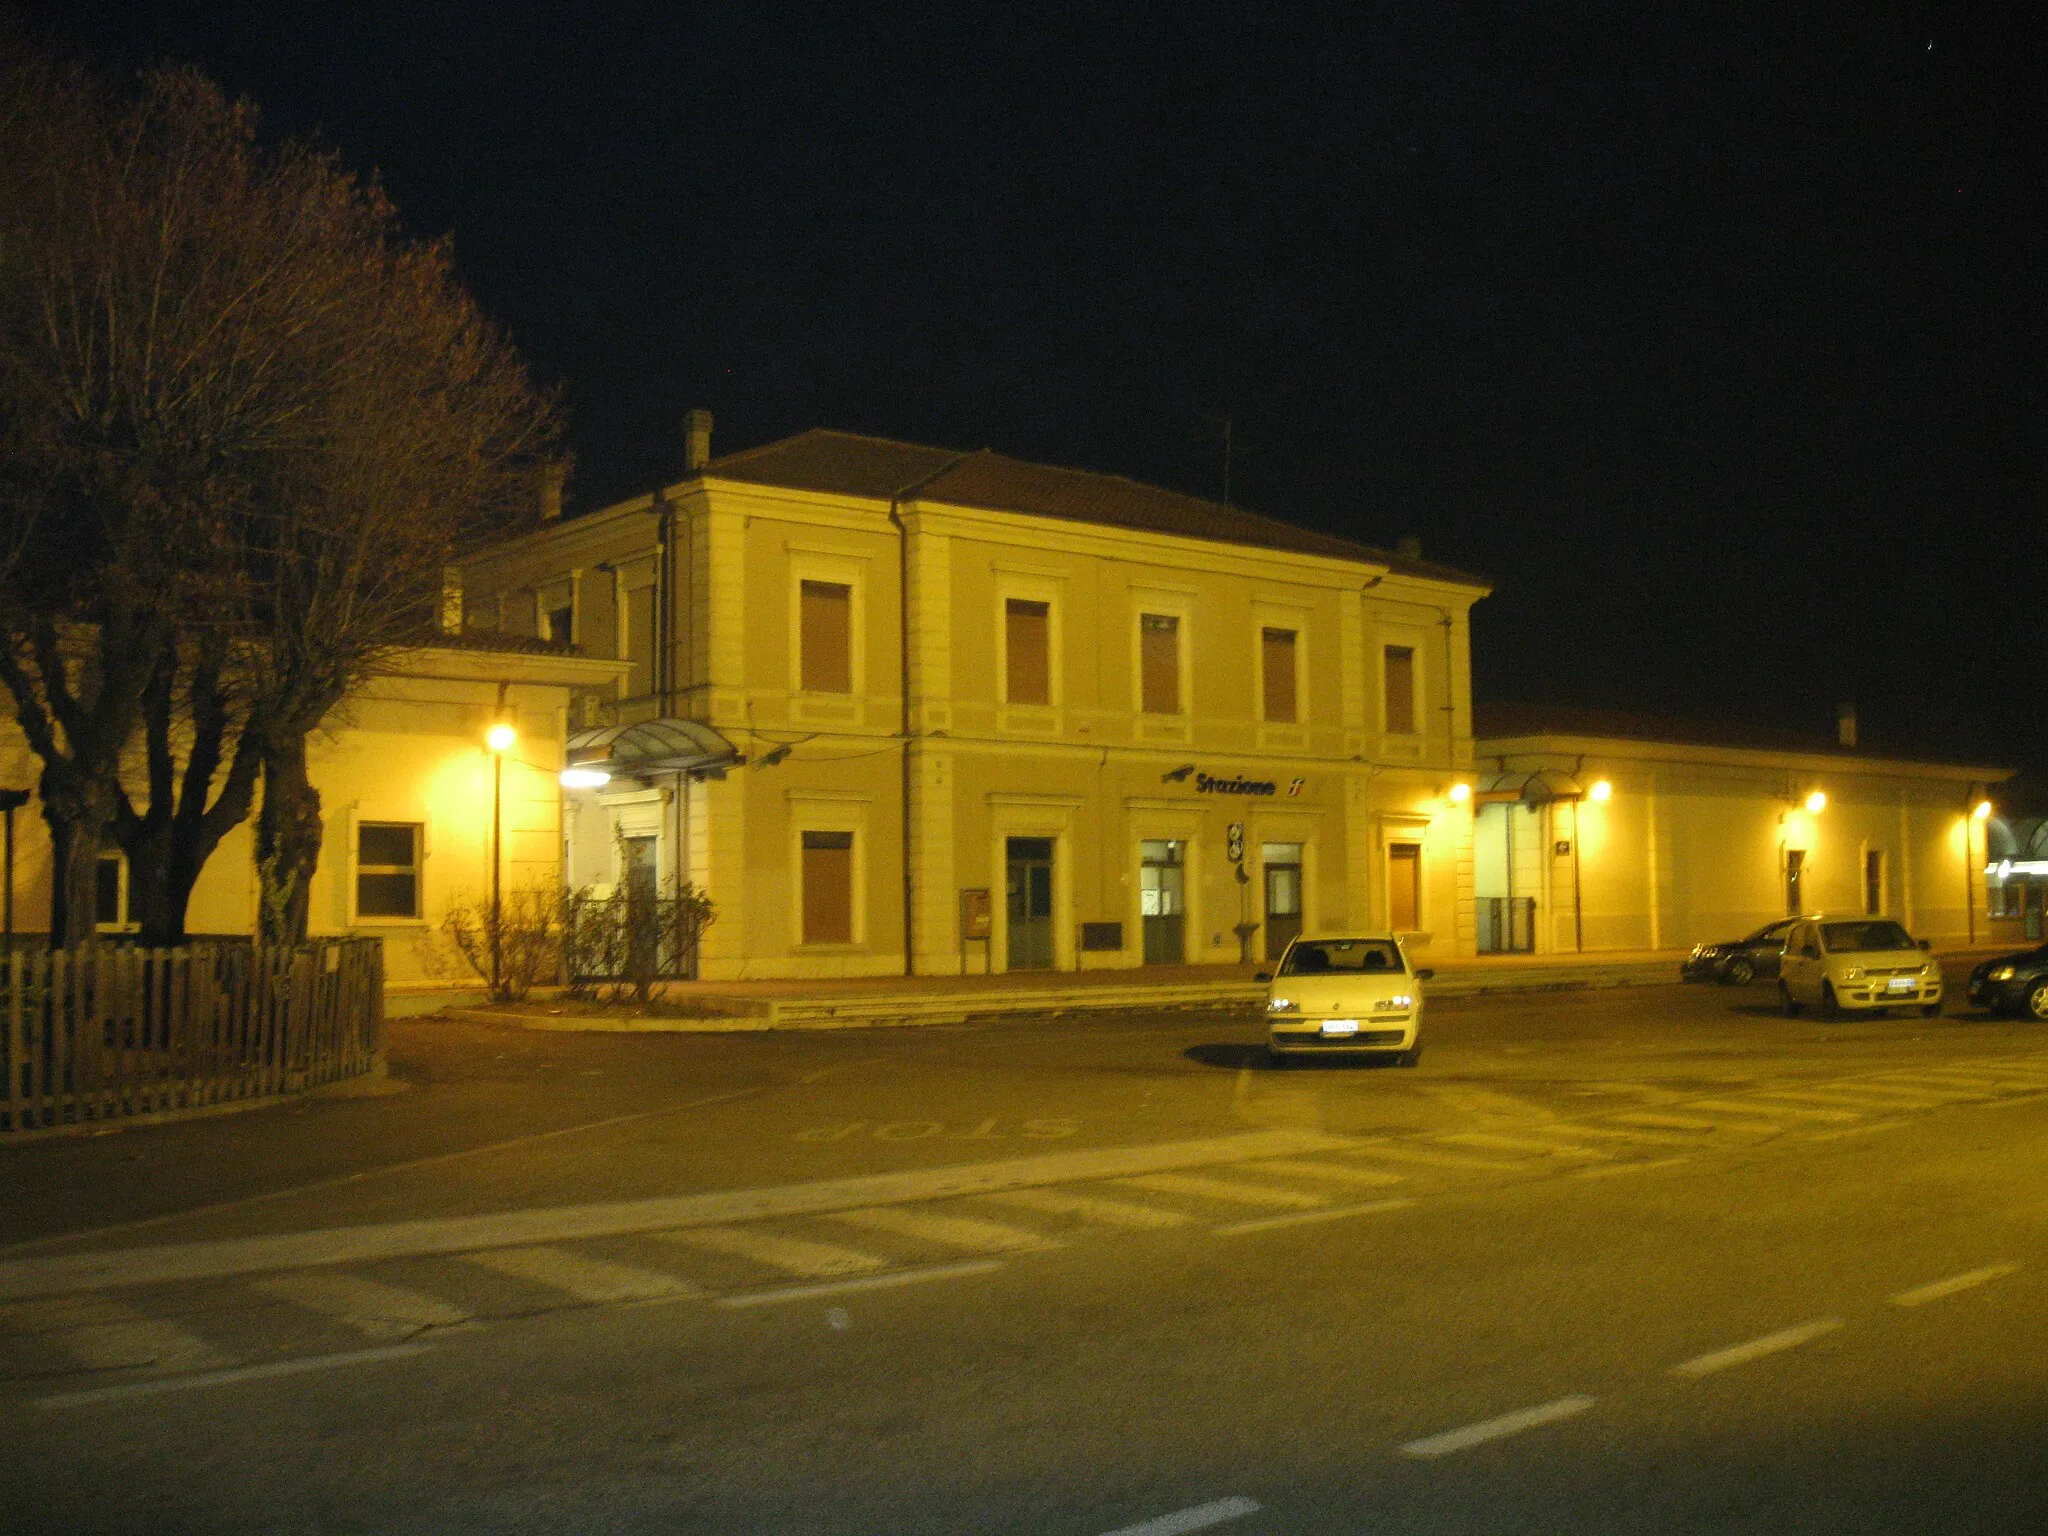 Bild von Isola della Scala